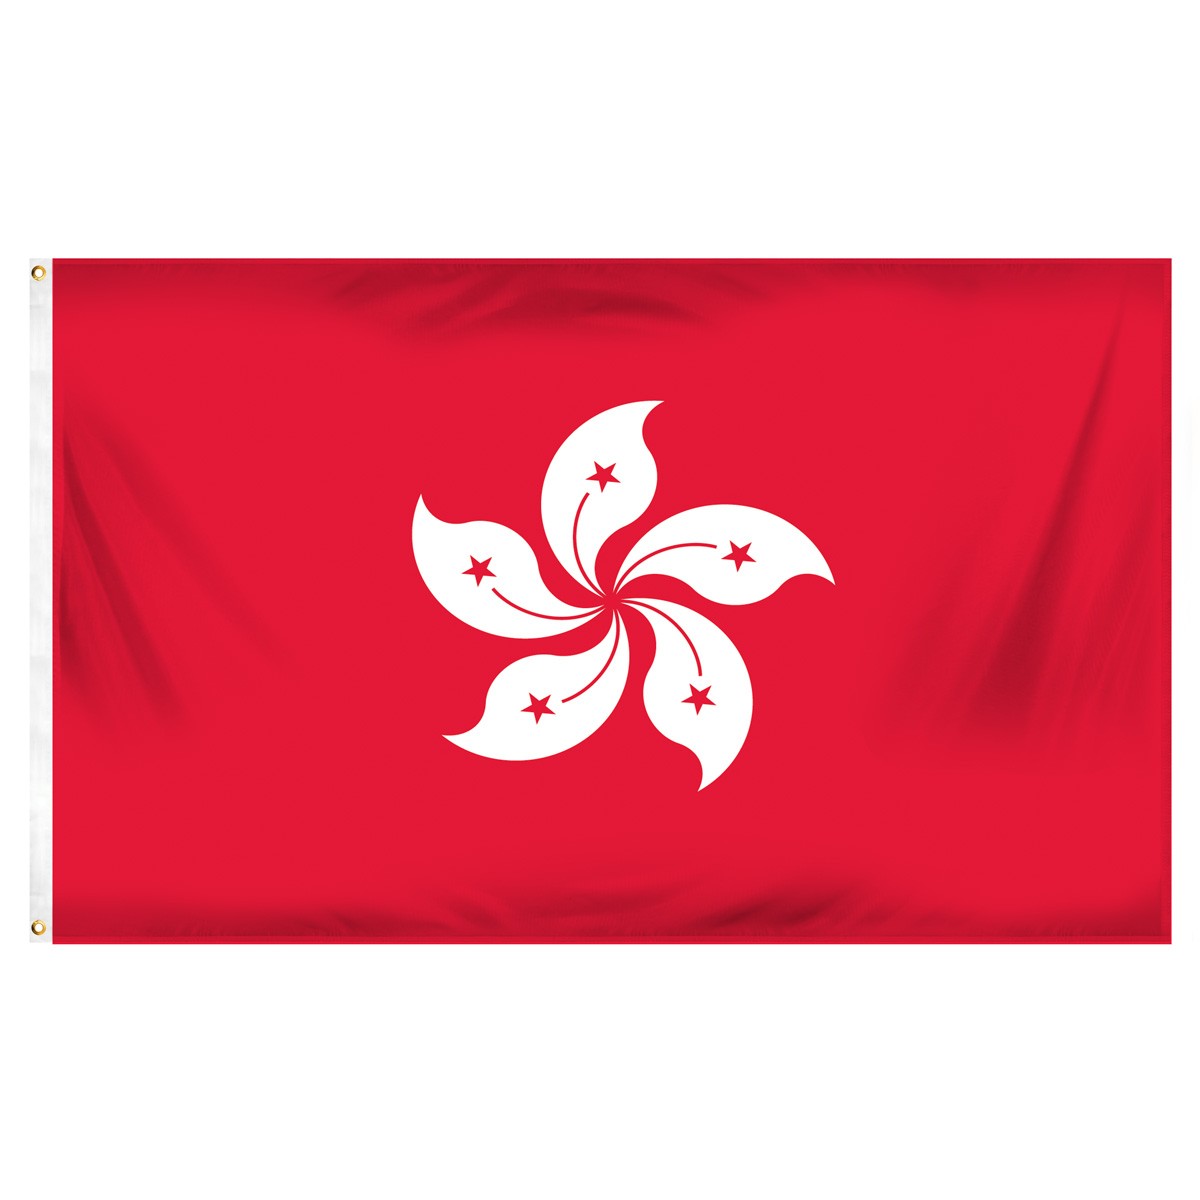 Hong Kong Executive Flags